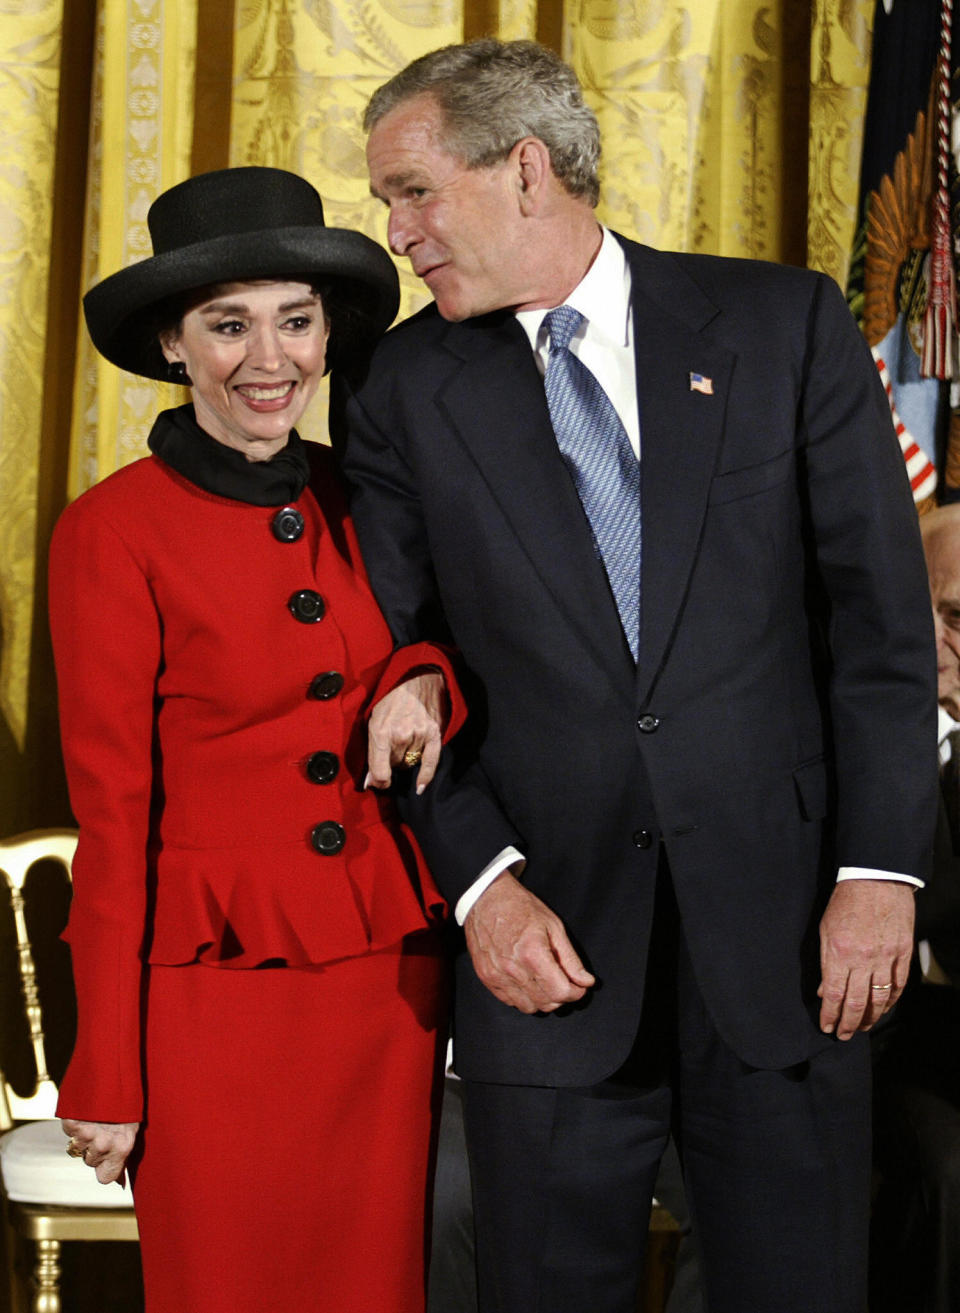 Awarded by George W. Bush in 2004.